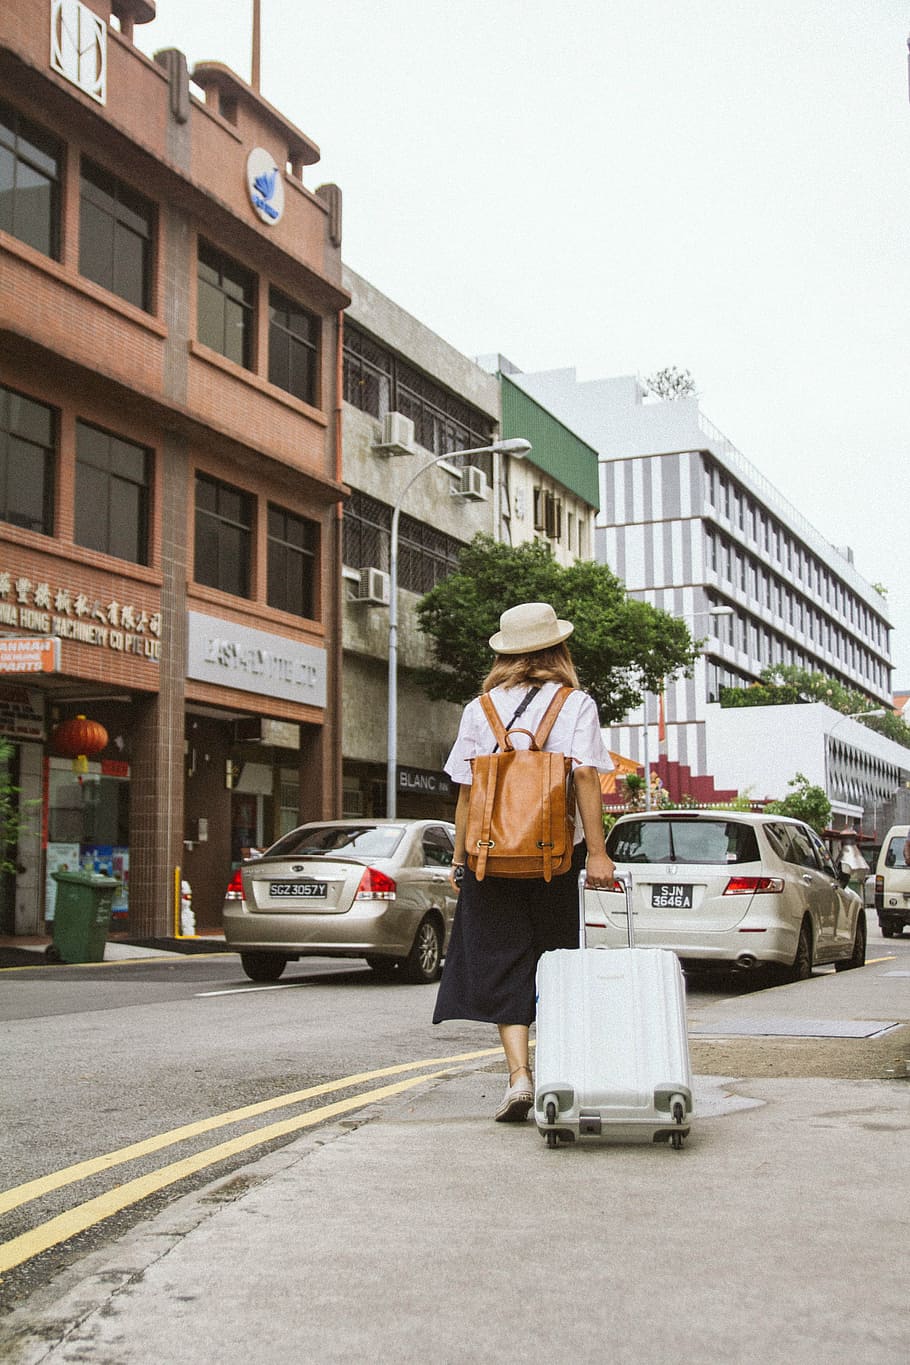 Mujer, tirando, blanco, equipaje rígido, urbano, ciudad, personas, viajes, aventura, equipaje